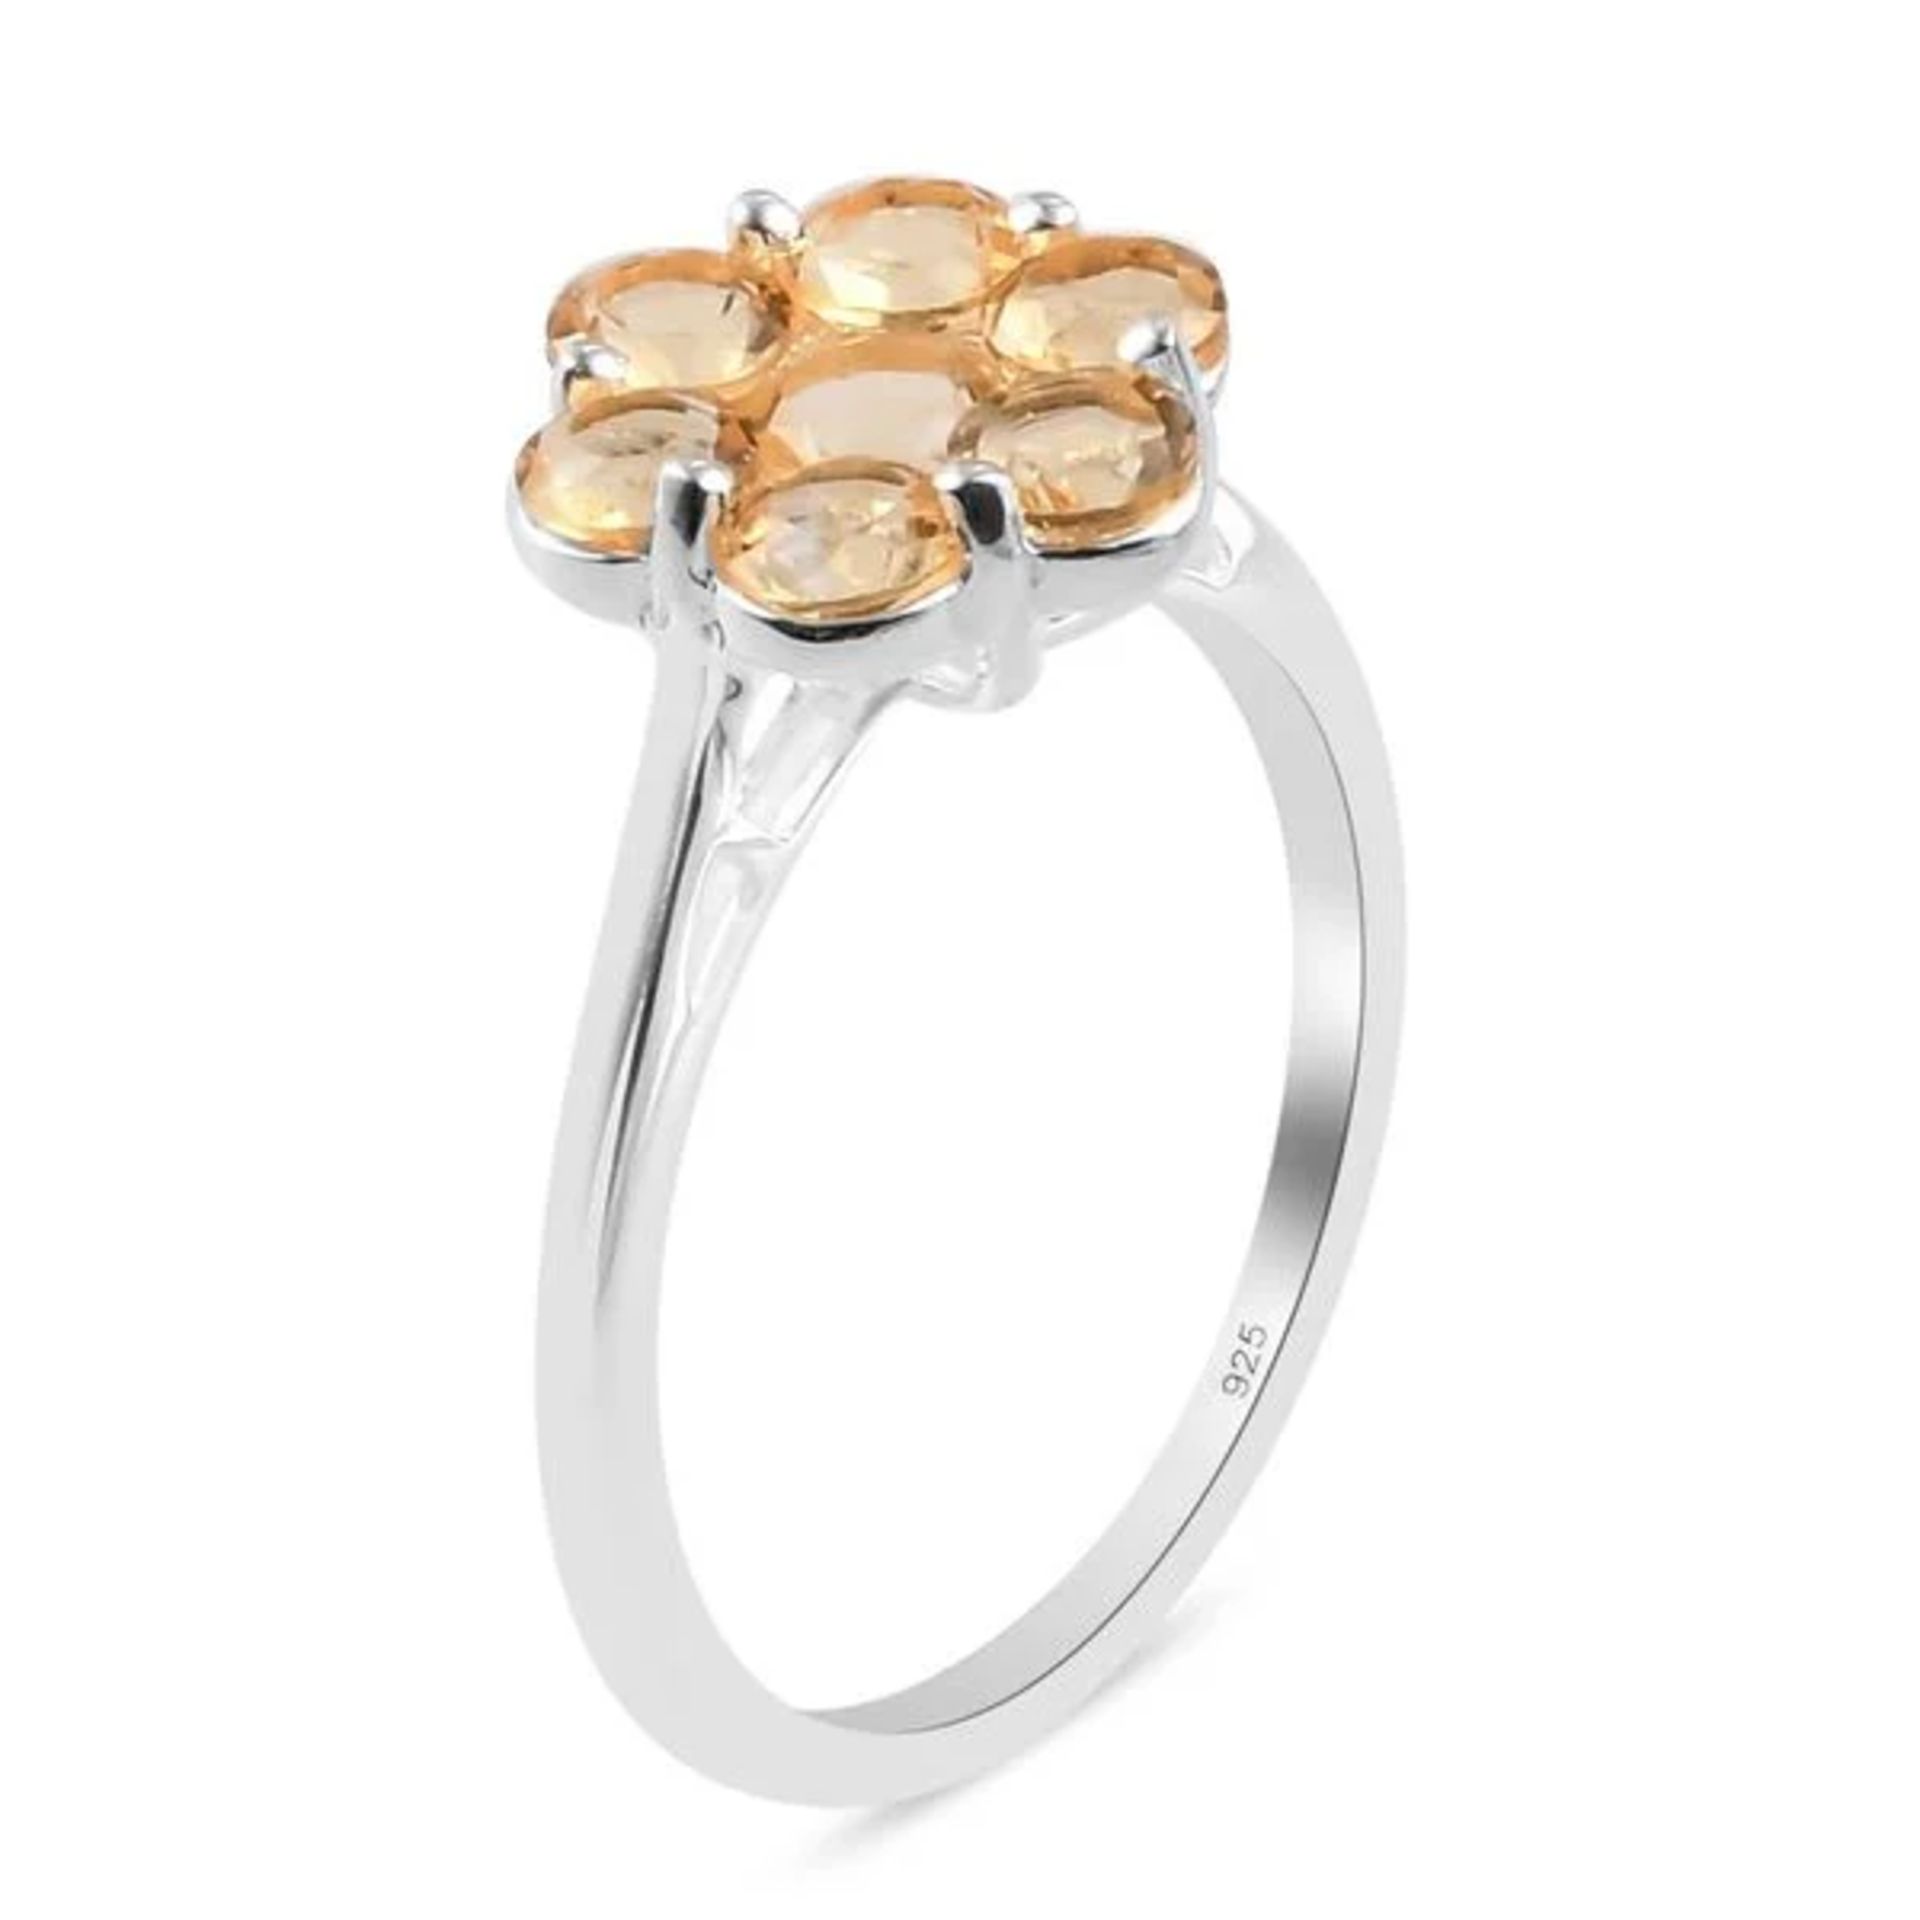 NEW!! Citrine Floral Cluster Ring, Earrings & Bracelet in Sterling Silver - Image 3 of 7